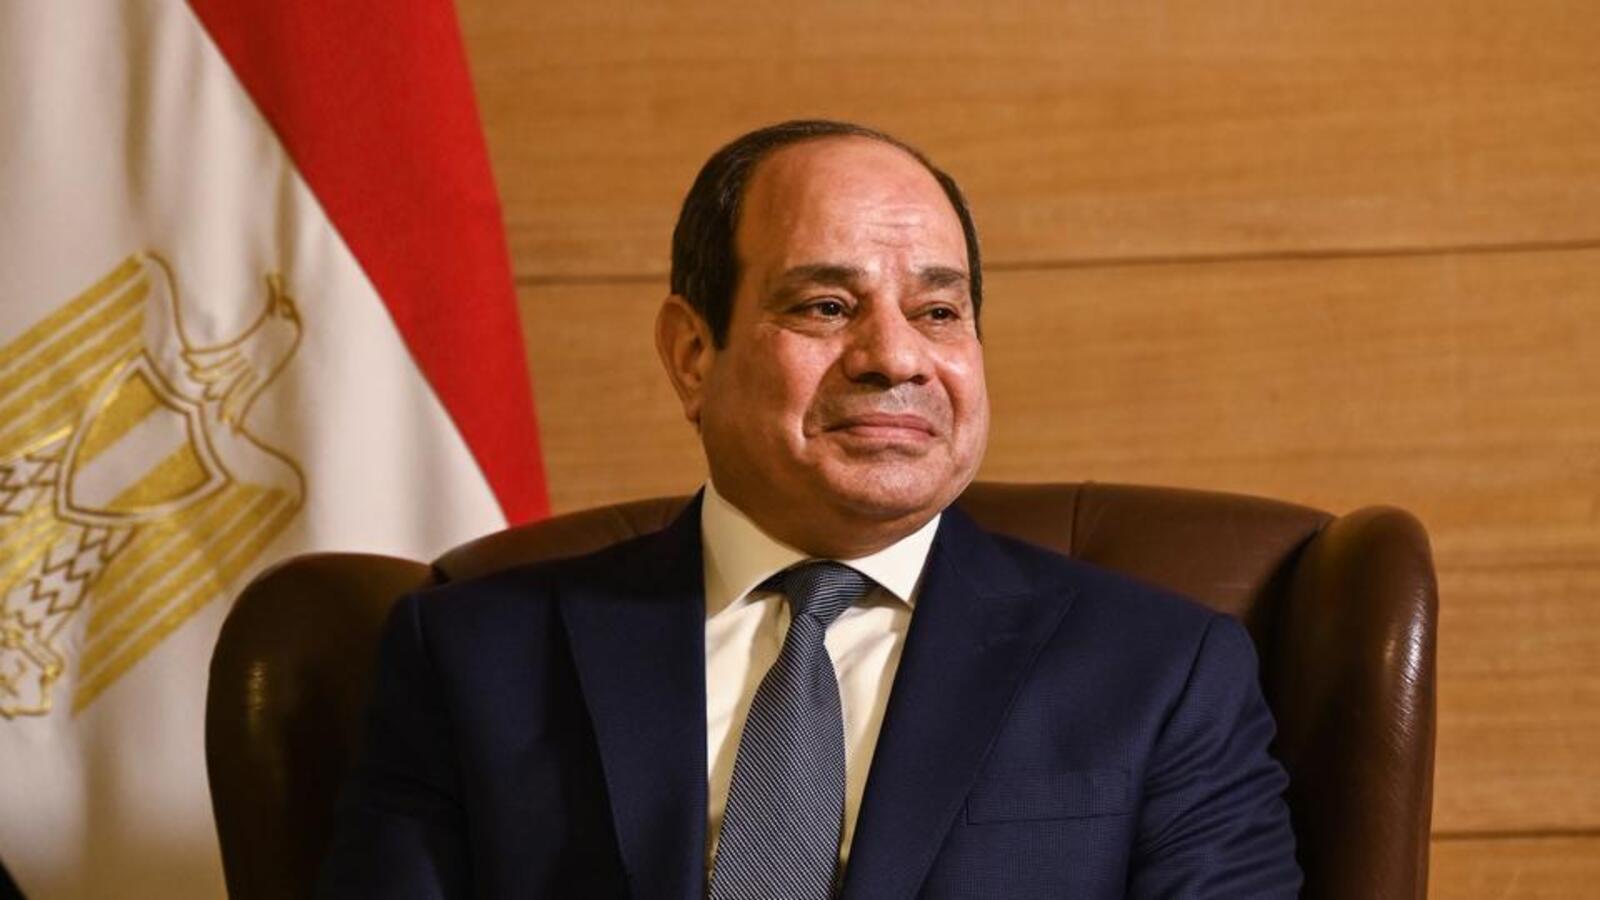 HT interview: Egypt enjoys key strategic location, says President Sisi | Latest News India - Hindustan Times